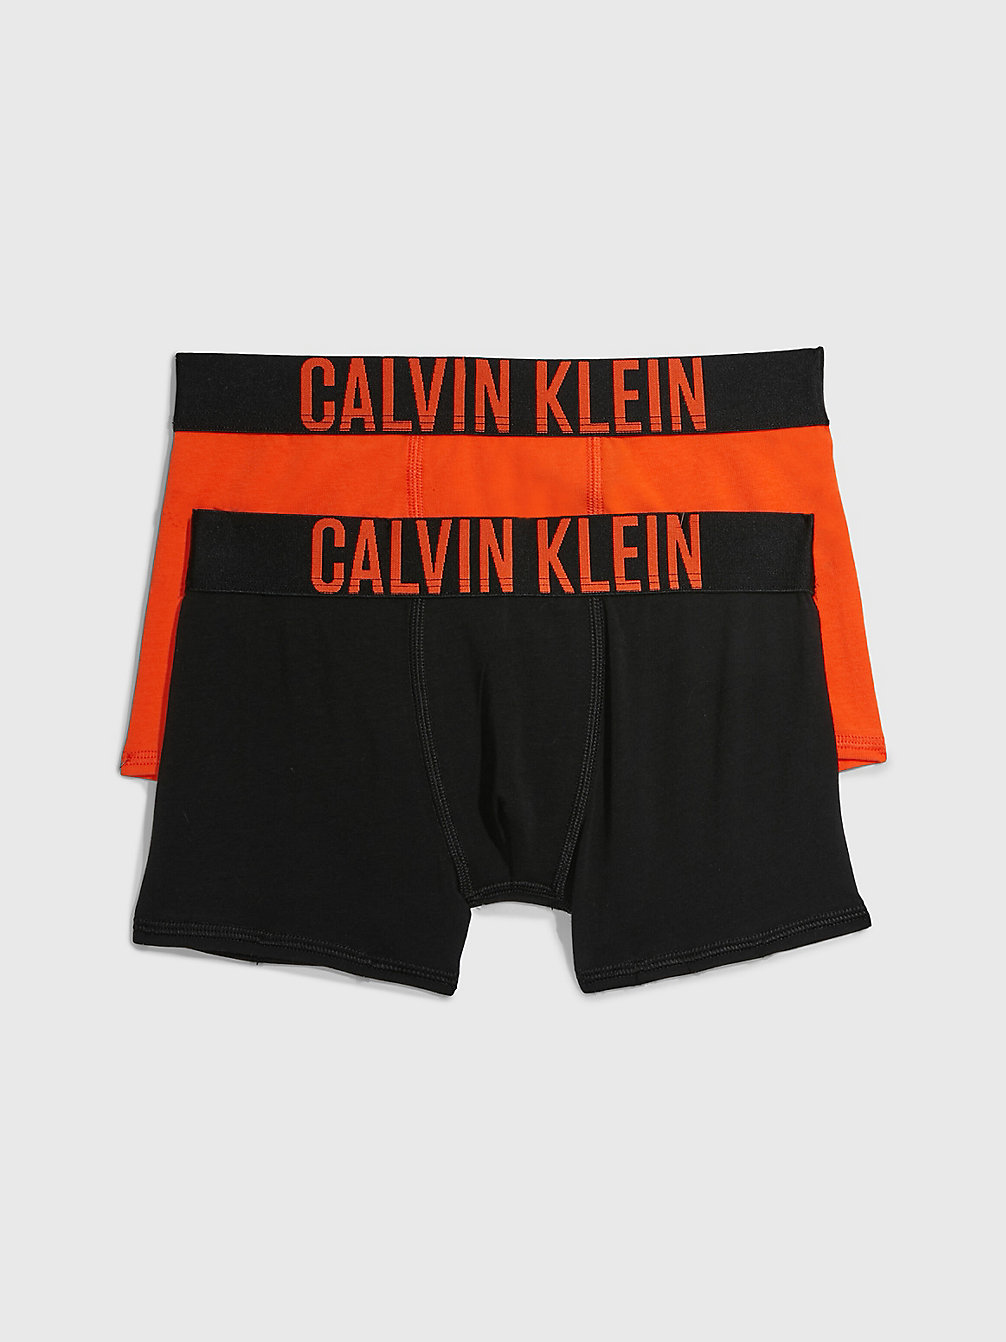 ORANGEHEAT/PVHBLACK Lot De 2 Boxers Pour Garçon - Intense Power undefined garcons Calvin Klein